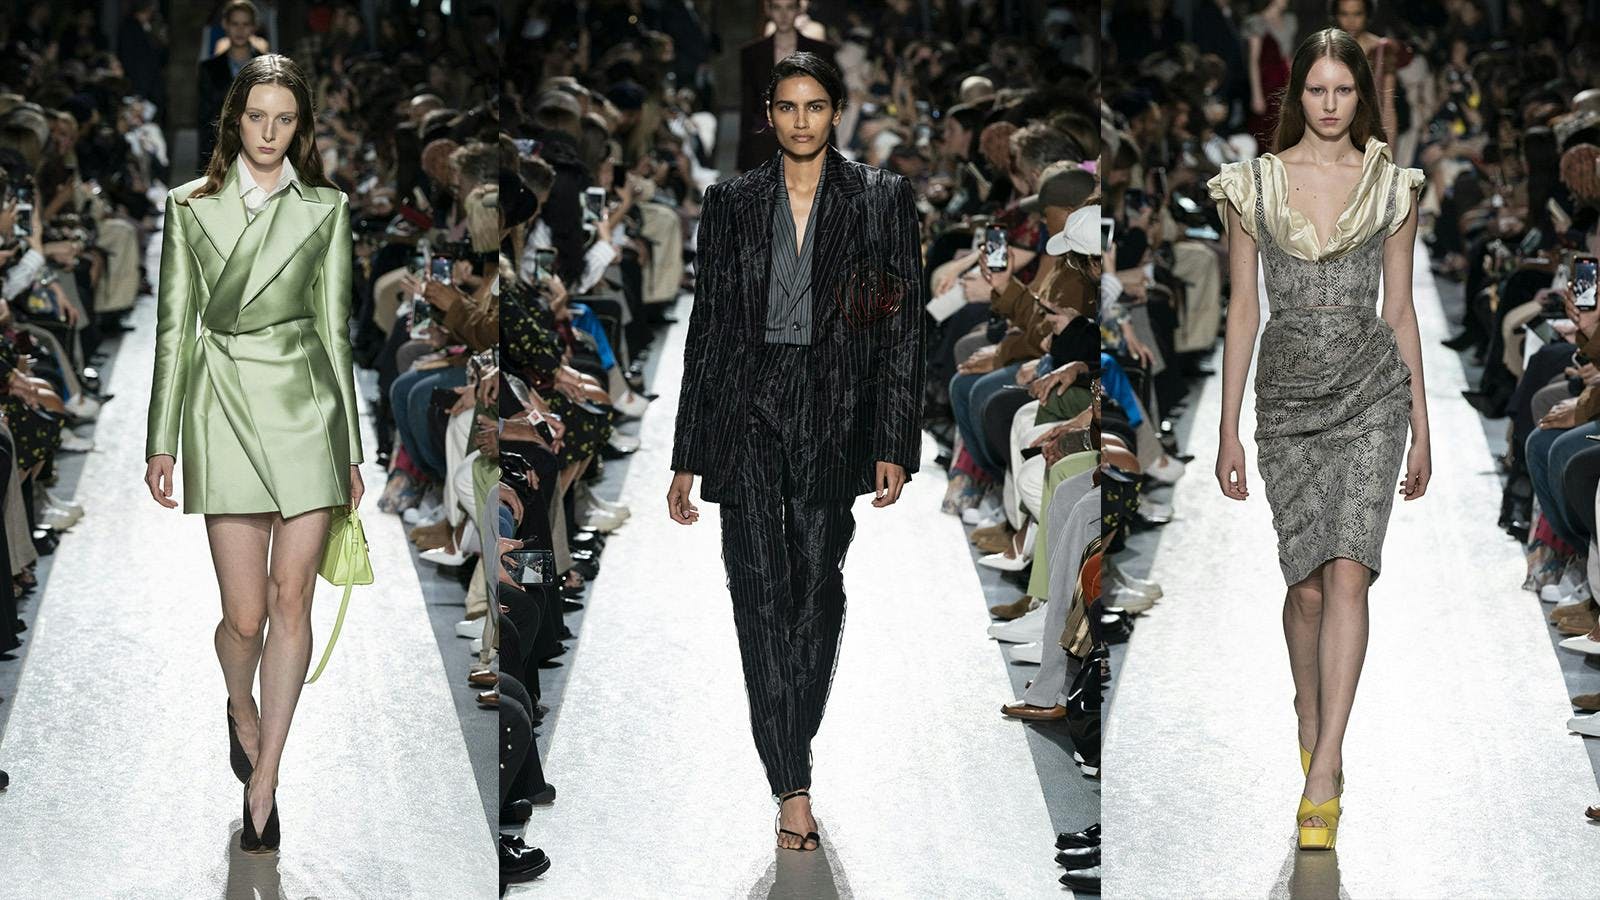 coat clothing apparel person human fashion runway crowd